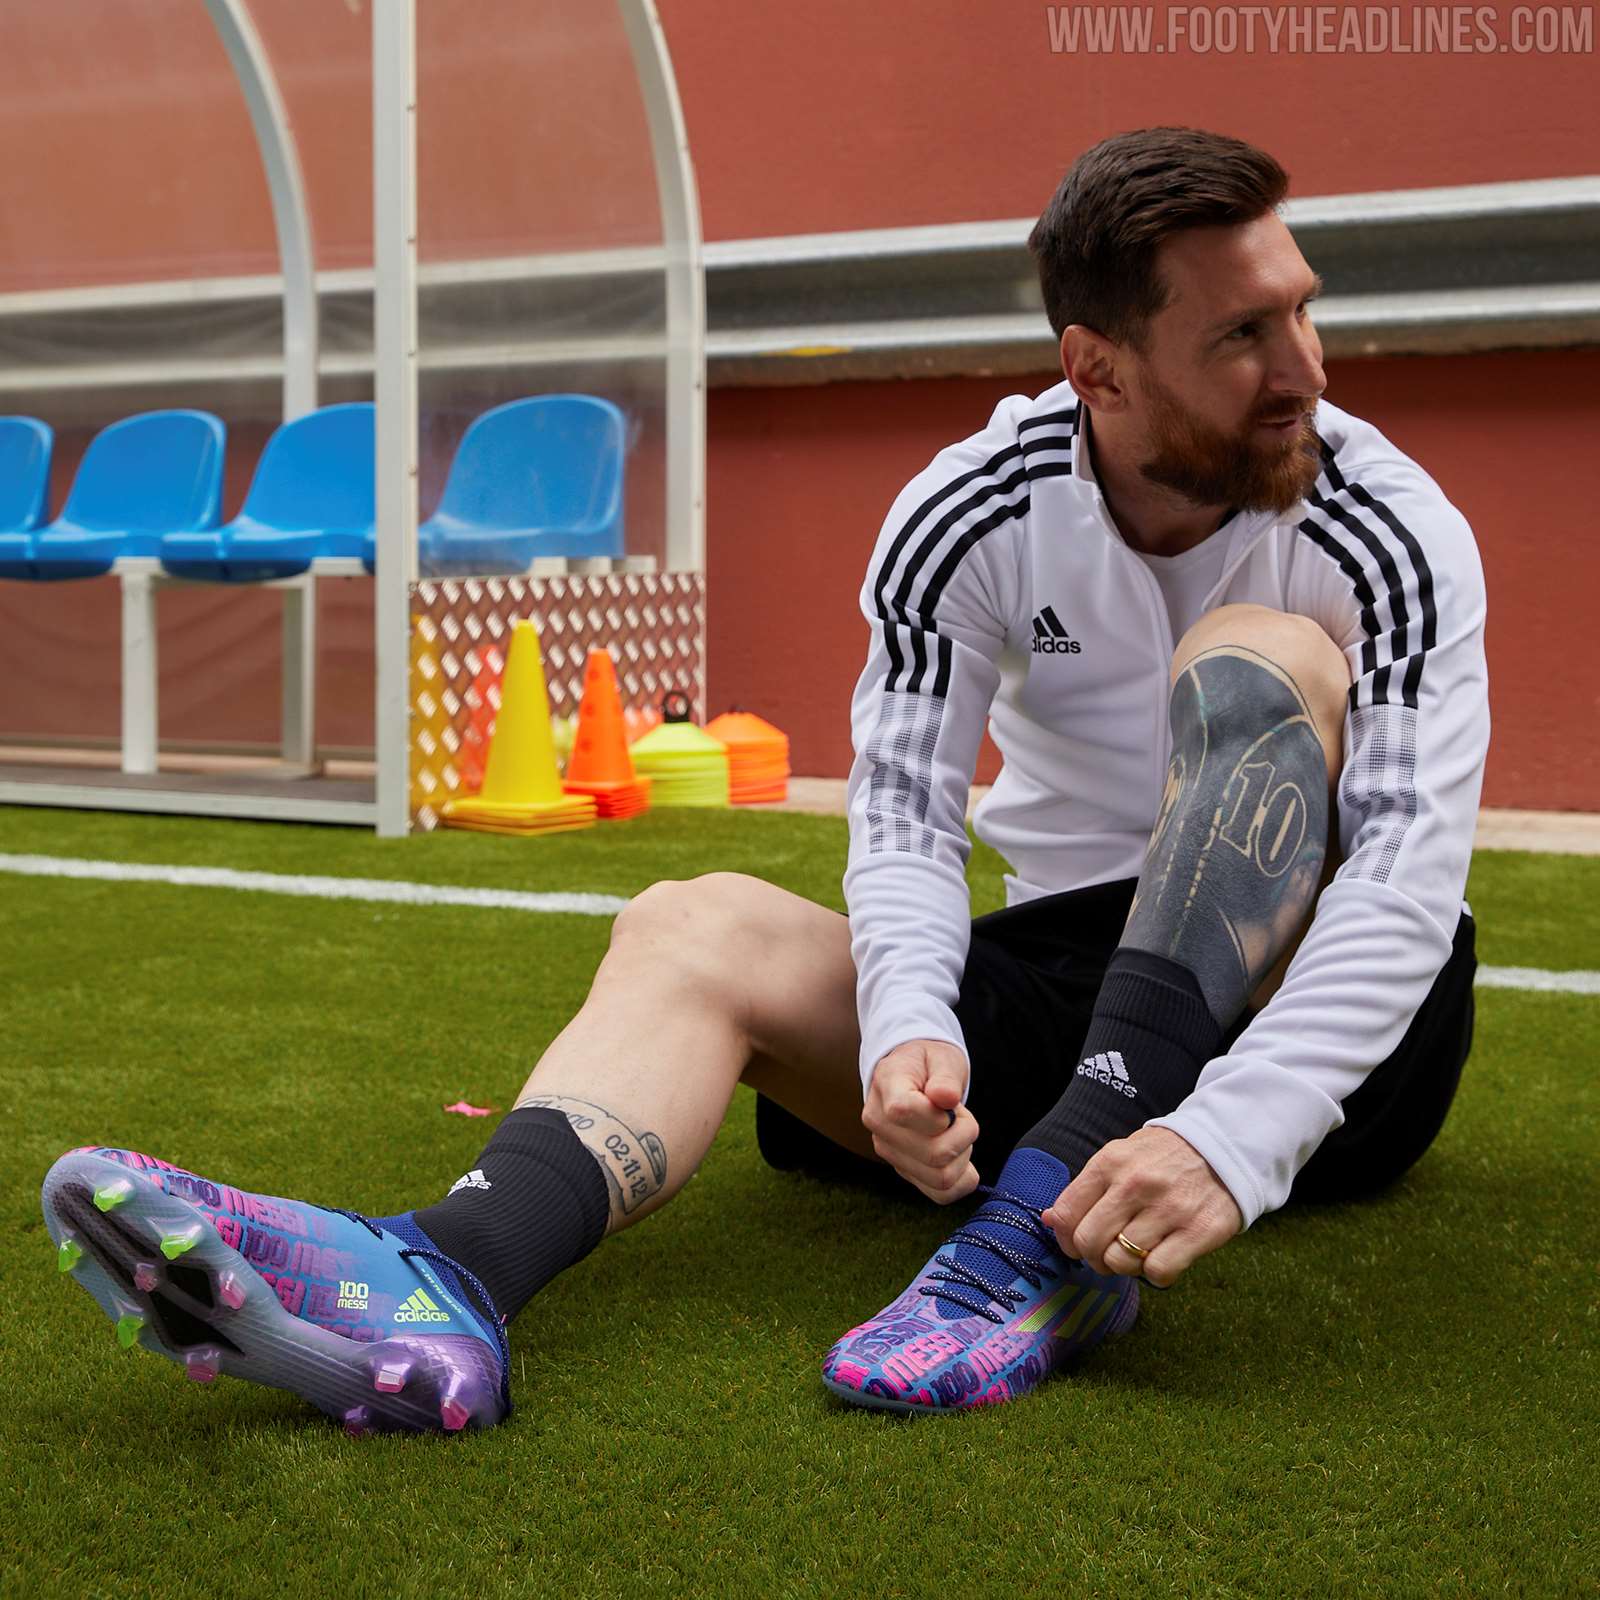 Adidas Speedflow 'Messi Unparalleled' Signature Boots Released - Footy Headlines